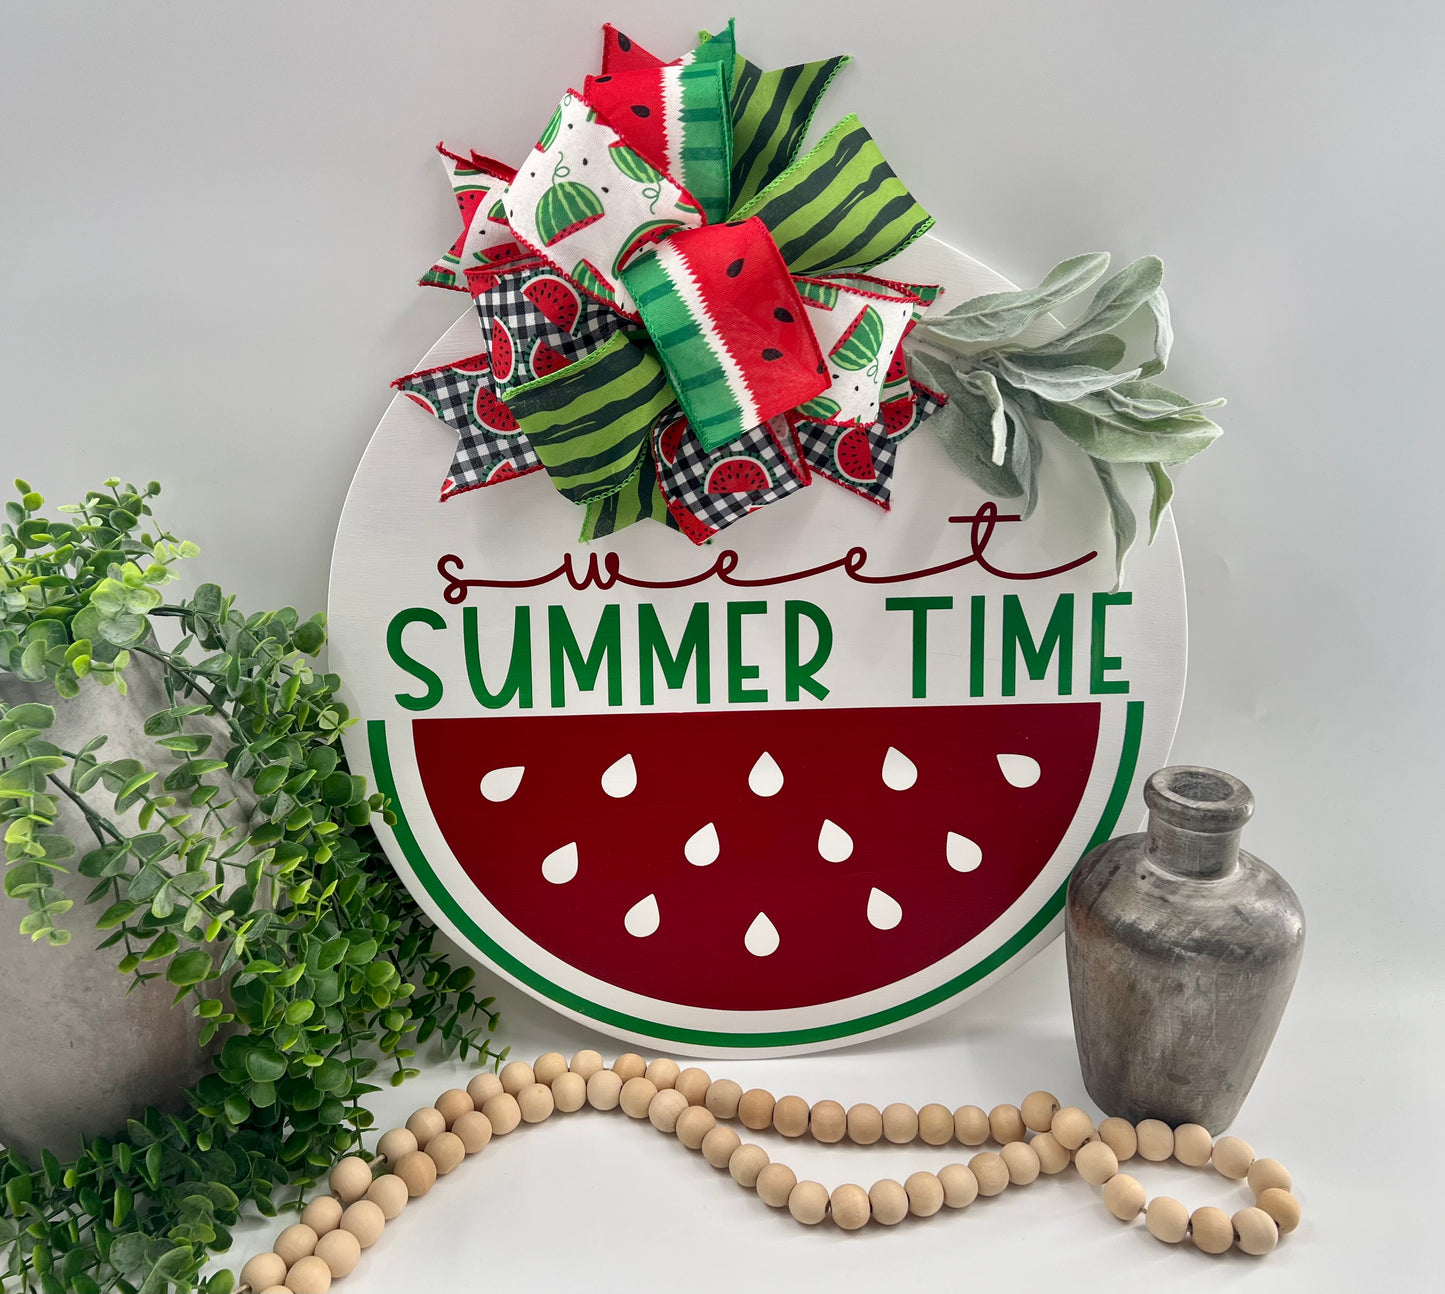 Sweet Summer Time Watermelon - 18” White Door Hanger